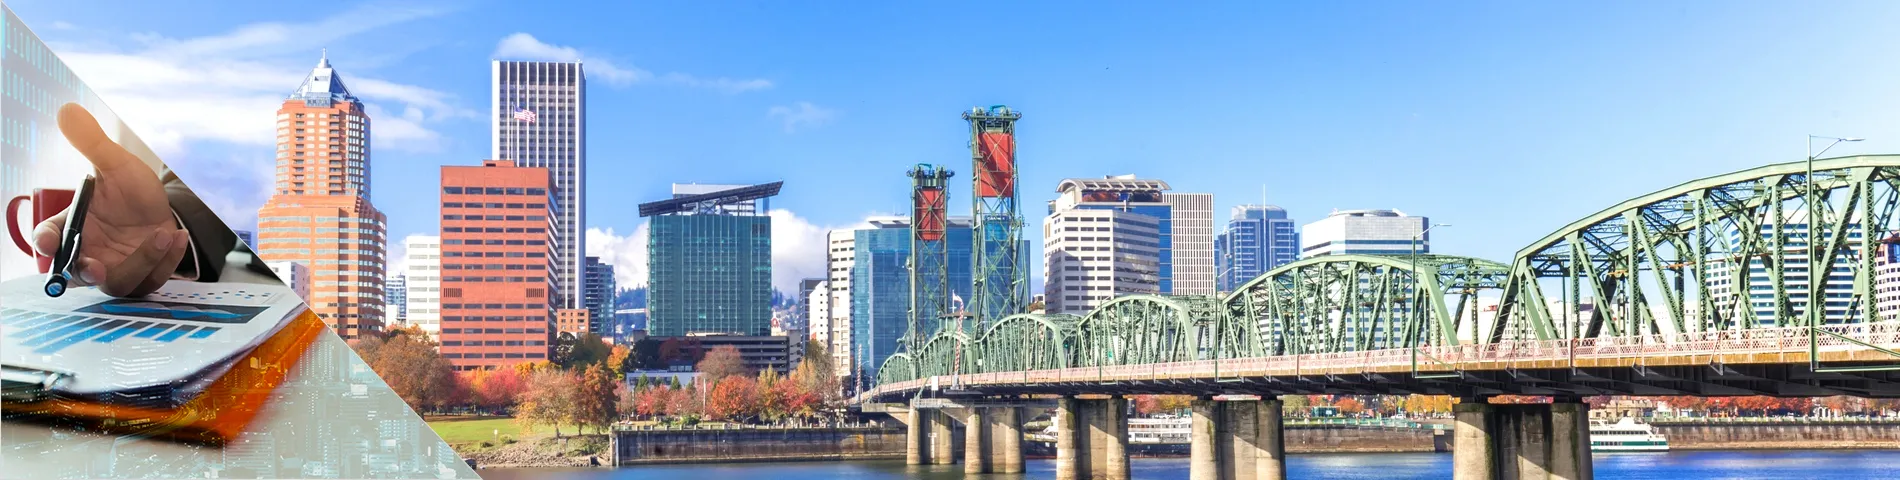 Portland - Bankowość i Finanse